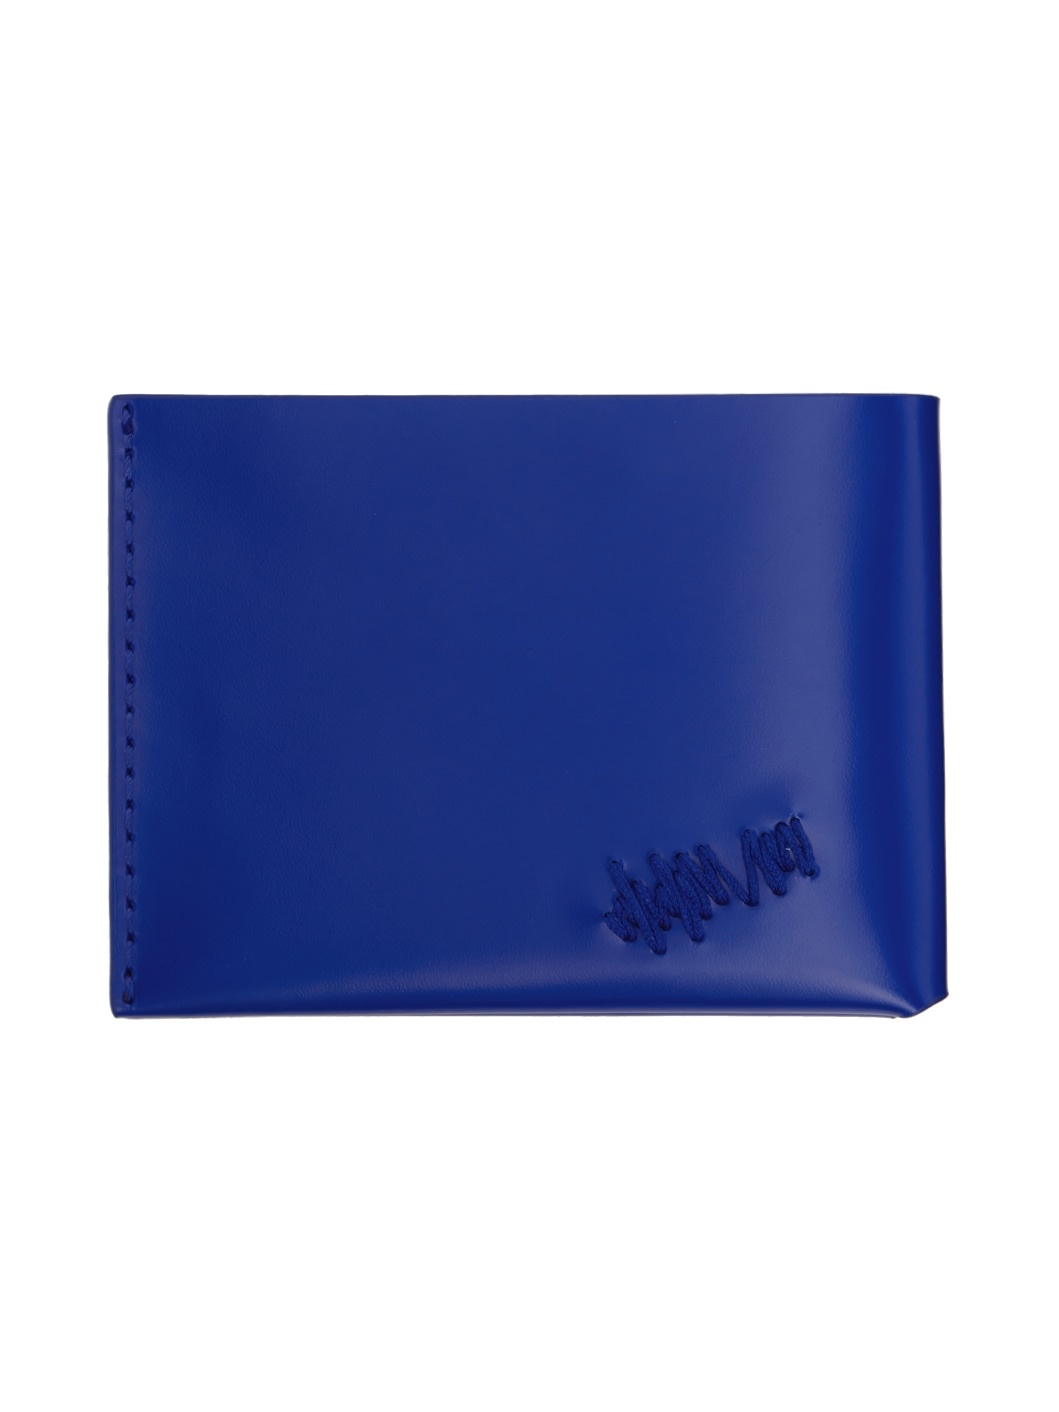 Blue Bursa Wallet - 2